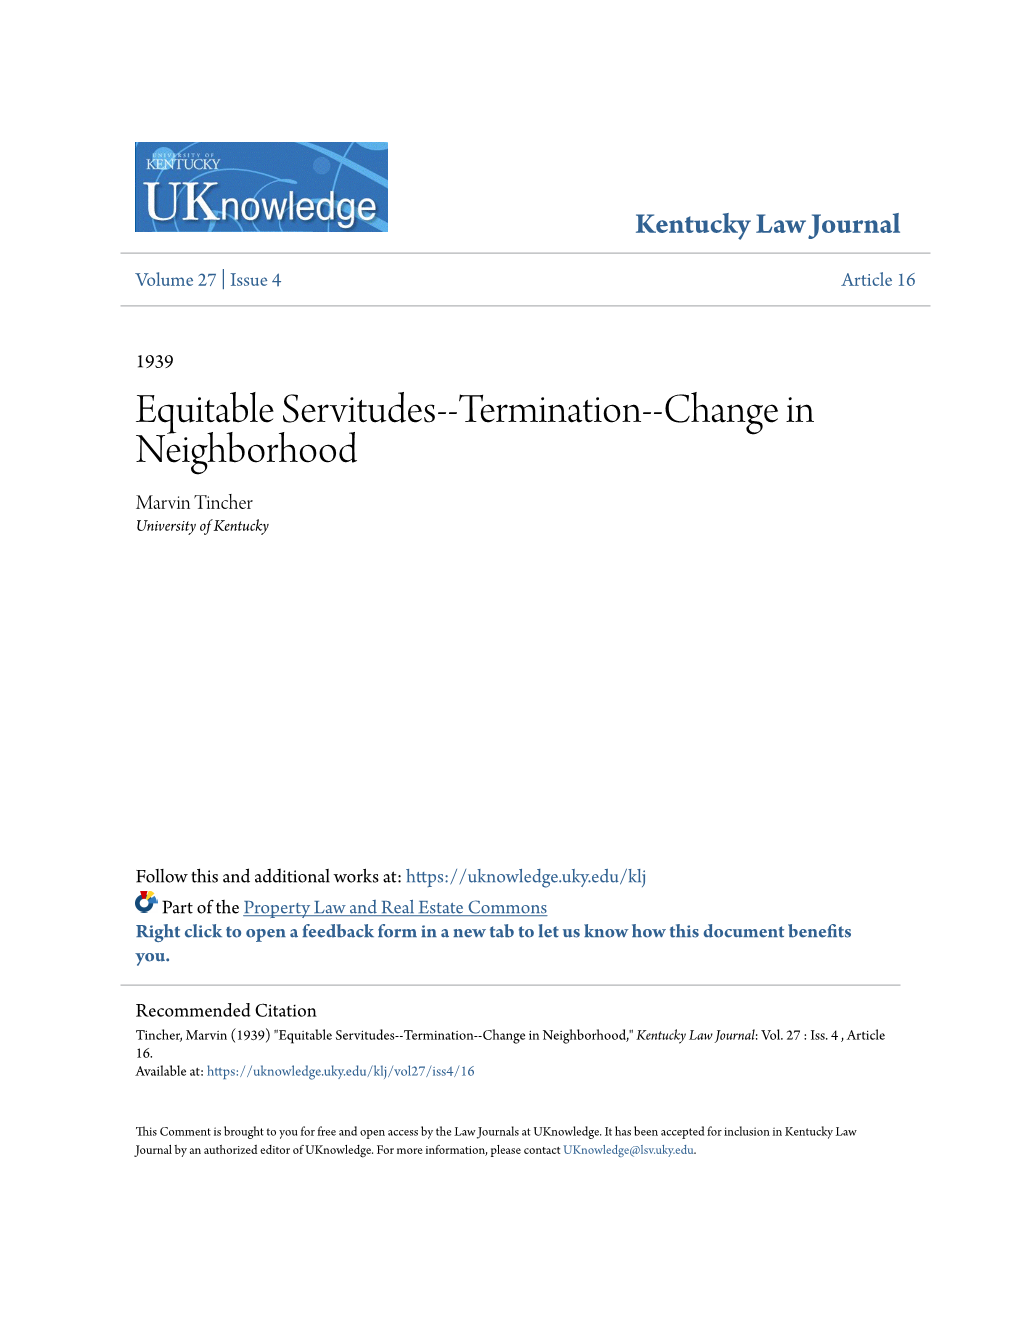 Equitable Servitudes--Termination--Change in Neighborhood Marvin Tincher University of Kentucky